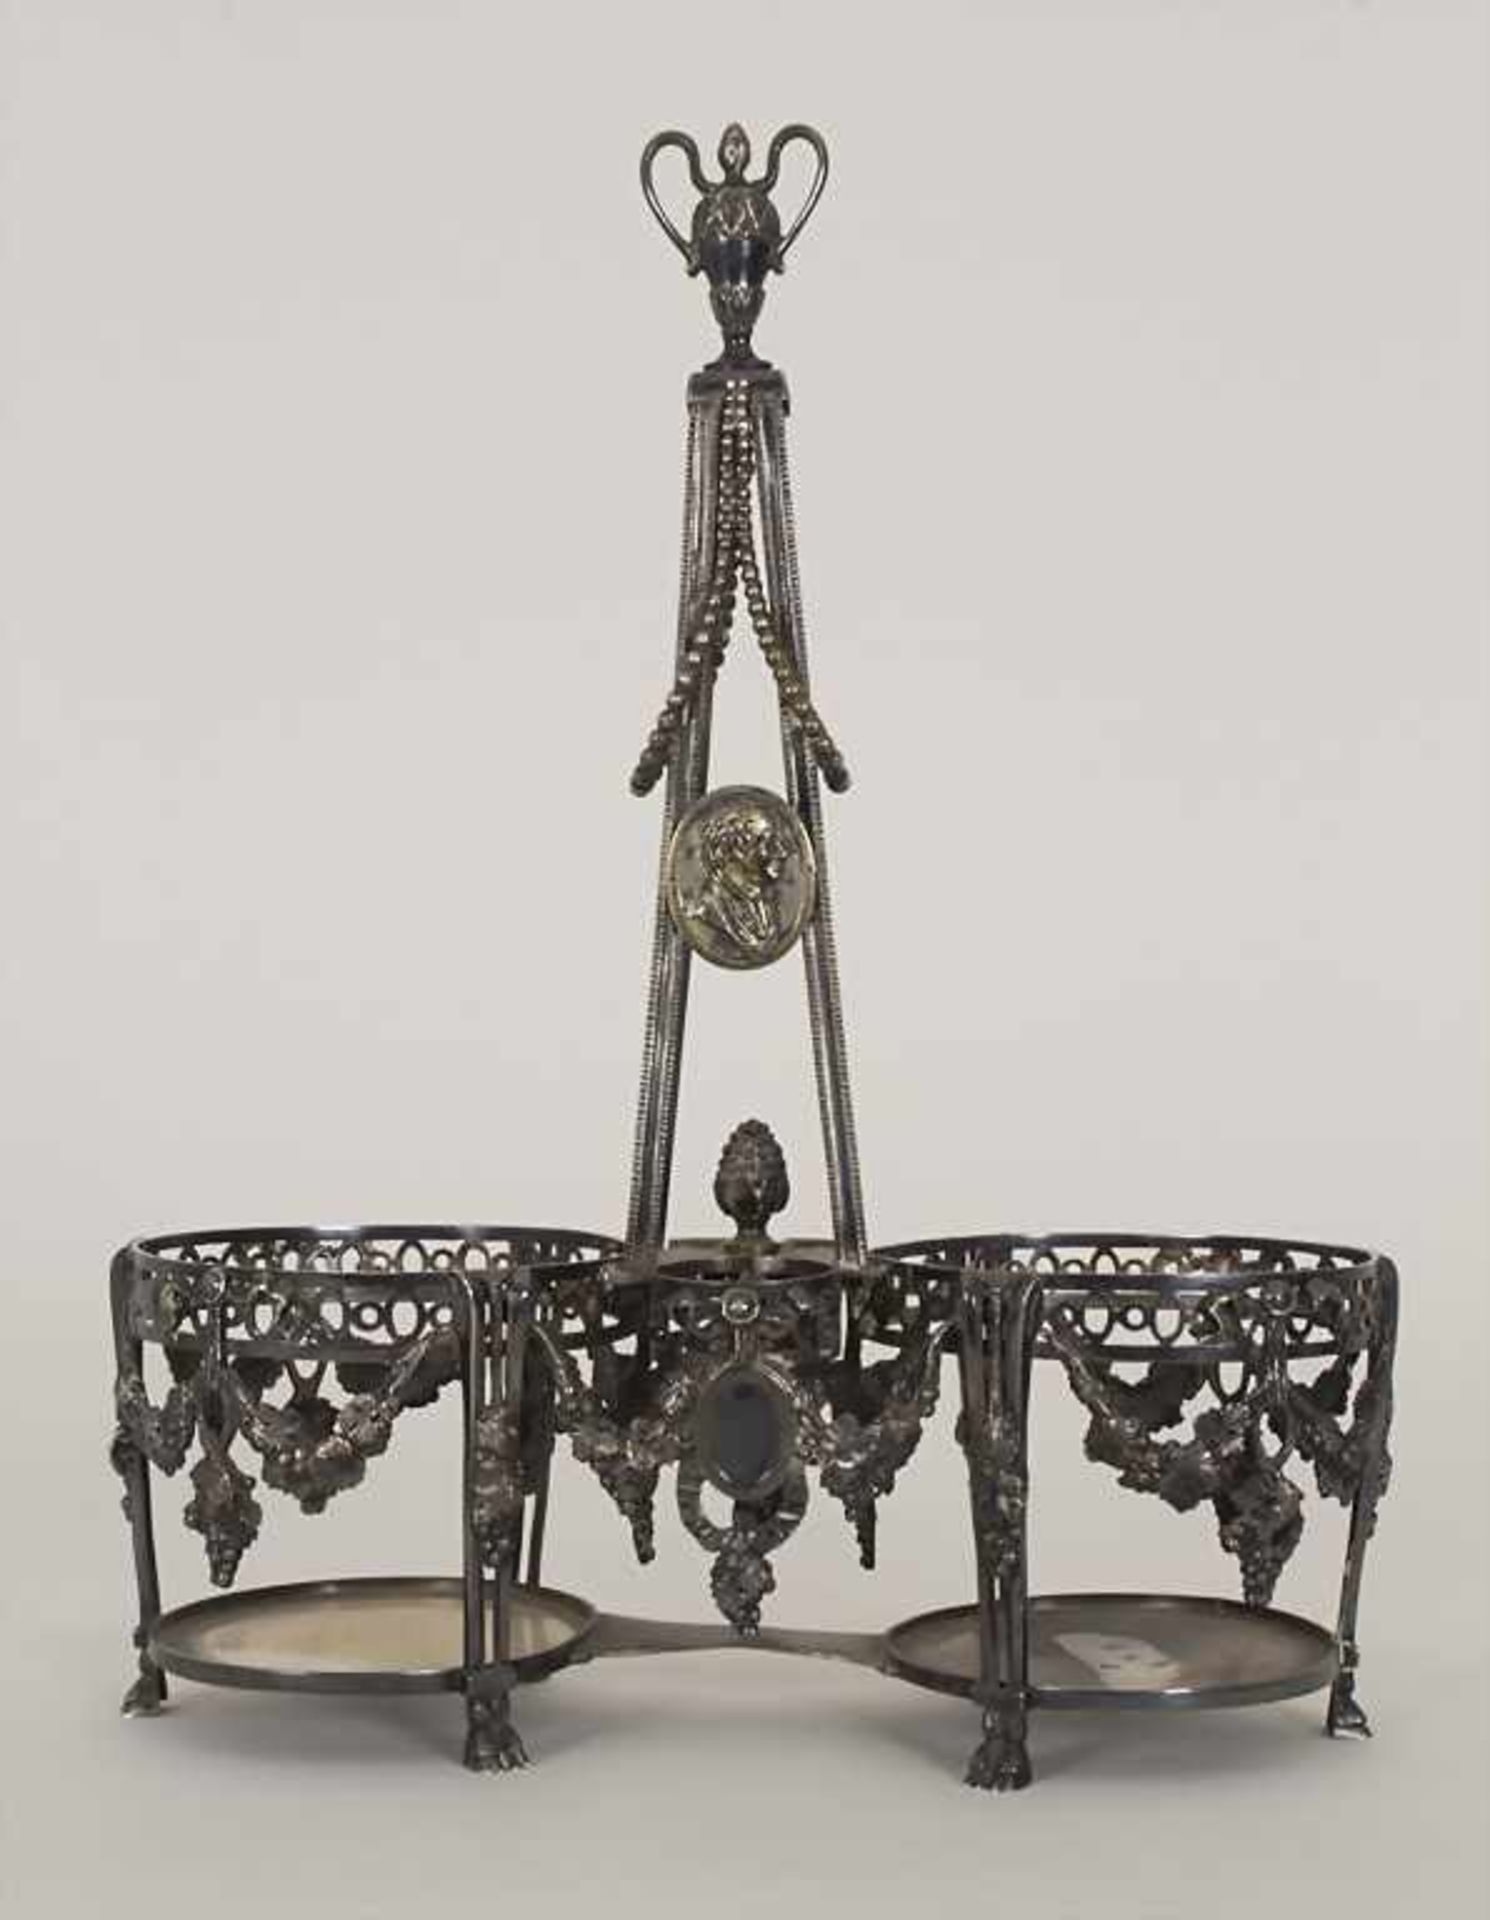 Louis-Seize Menage / A Louis-seize silver cruet stand, Namur, 1789